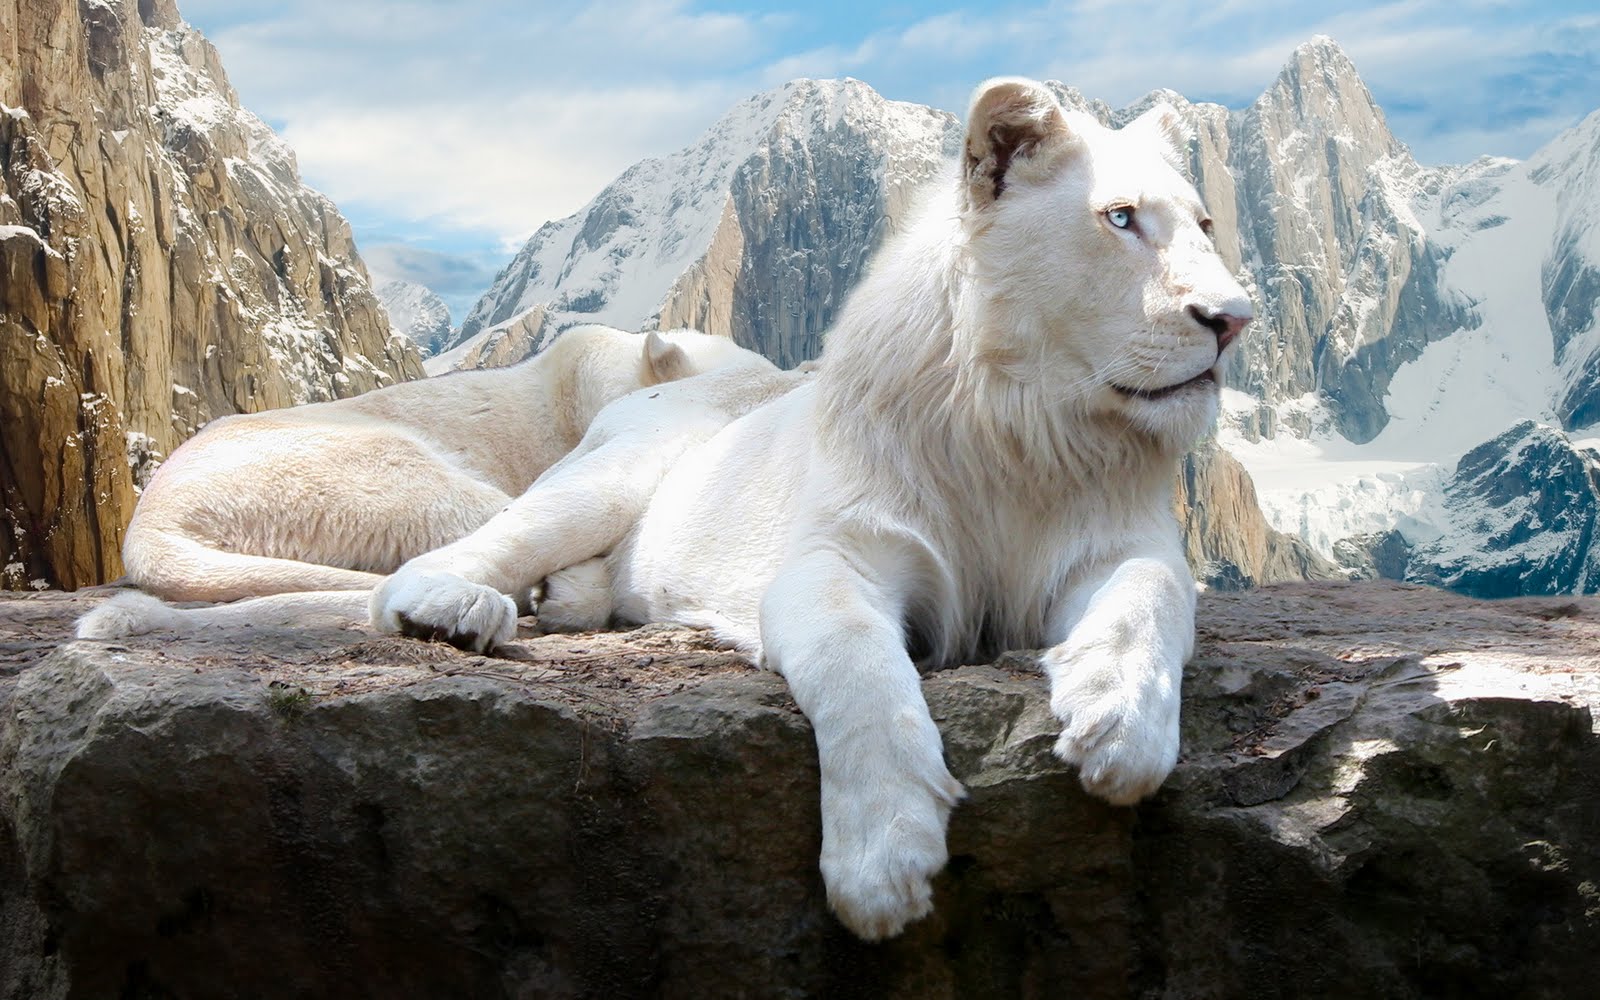 beautiful white lion wallpaper